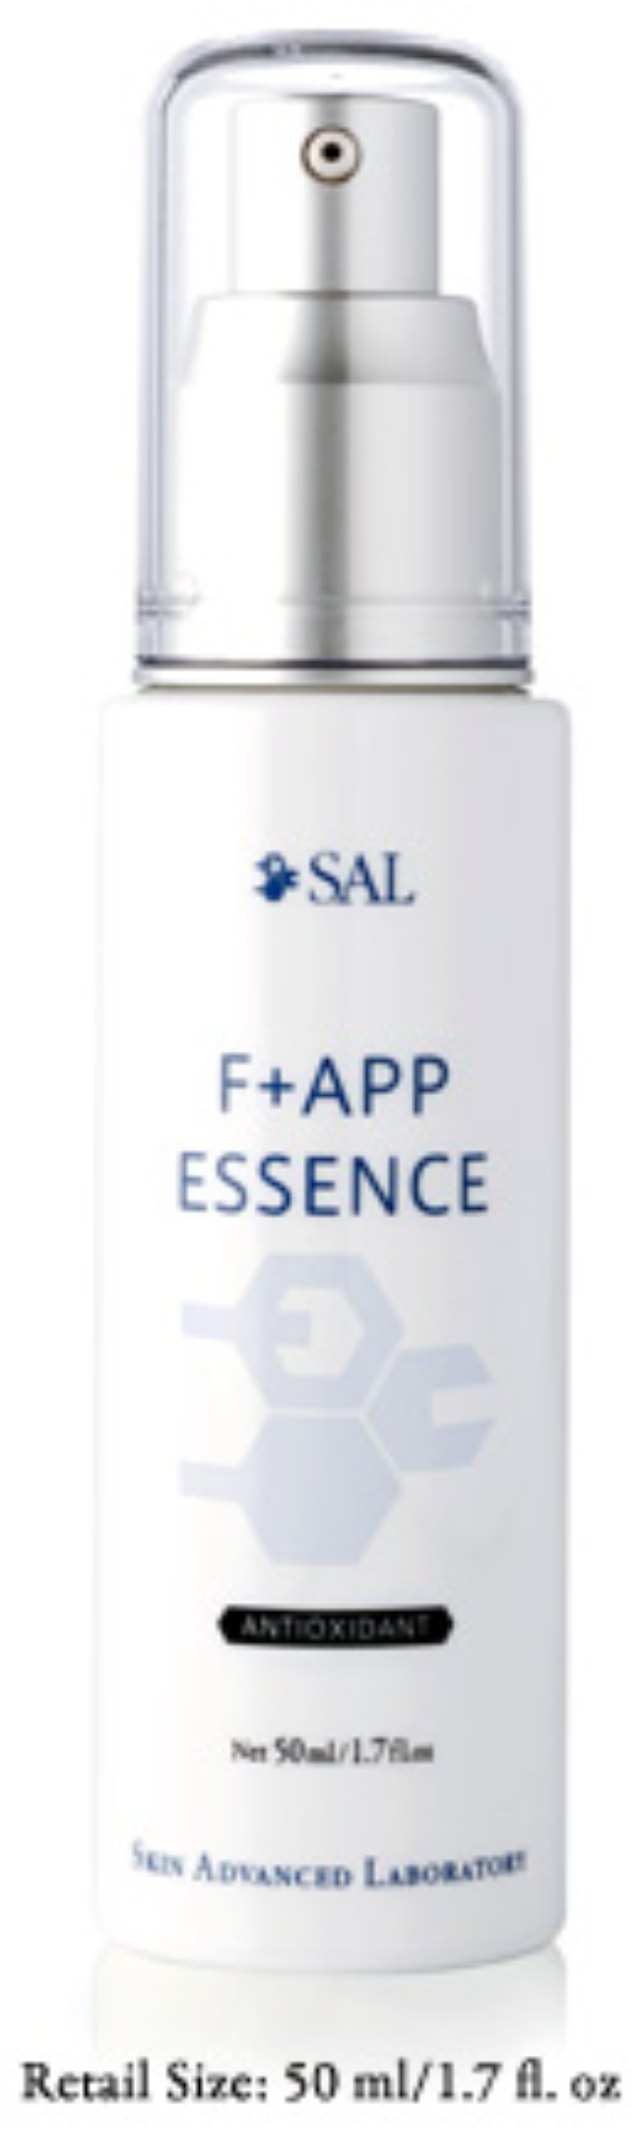 SAL - F+APP Essence 百倍美日抗氧化精華液 50ml (ANTIOXIDANT)